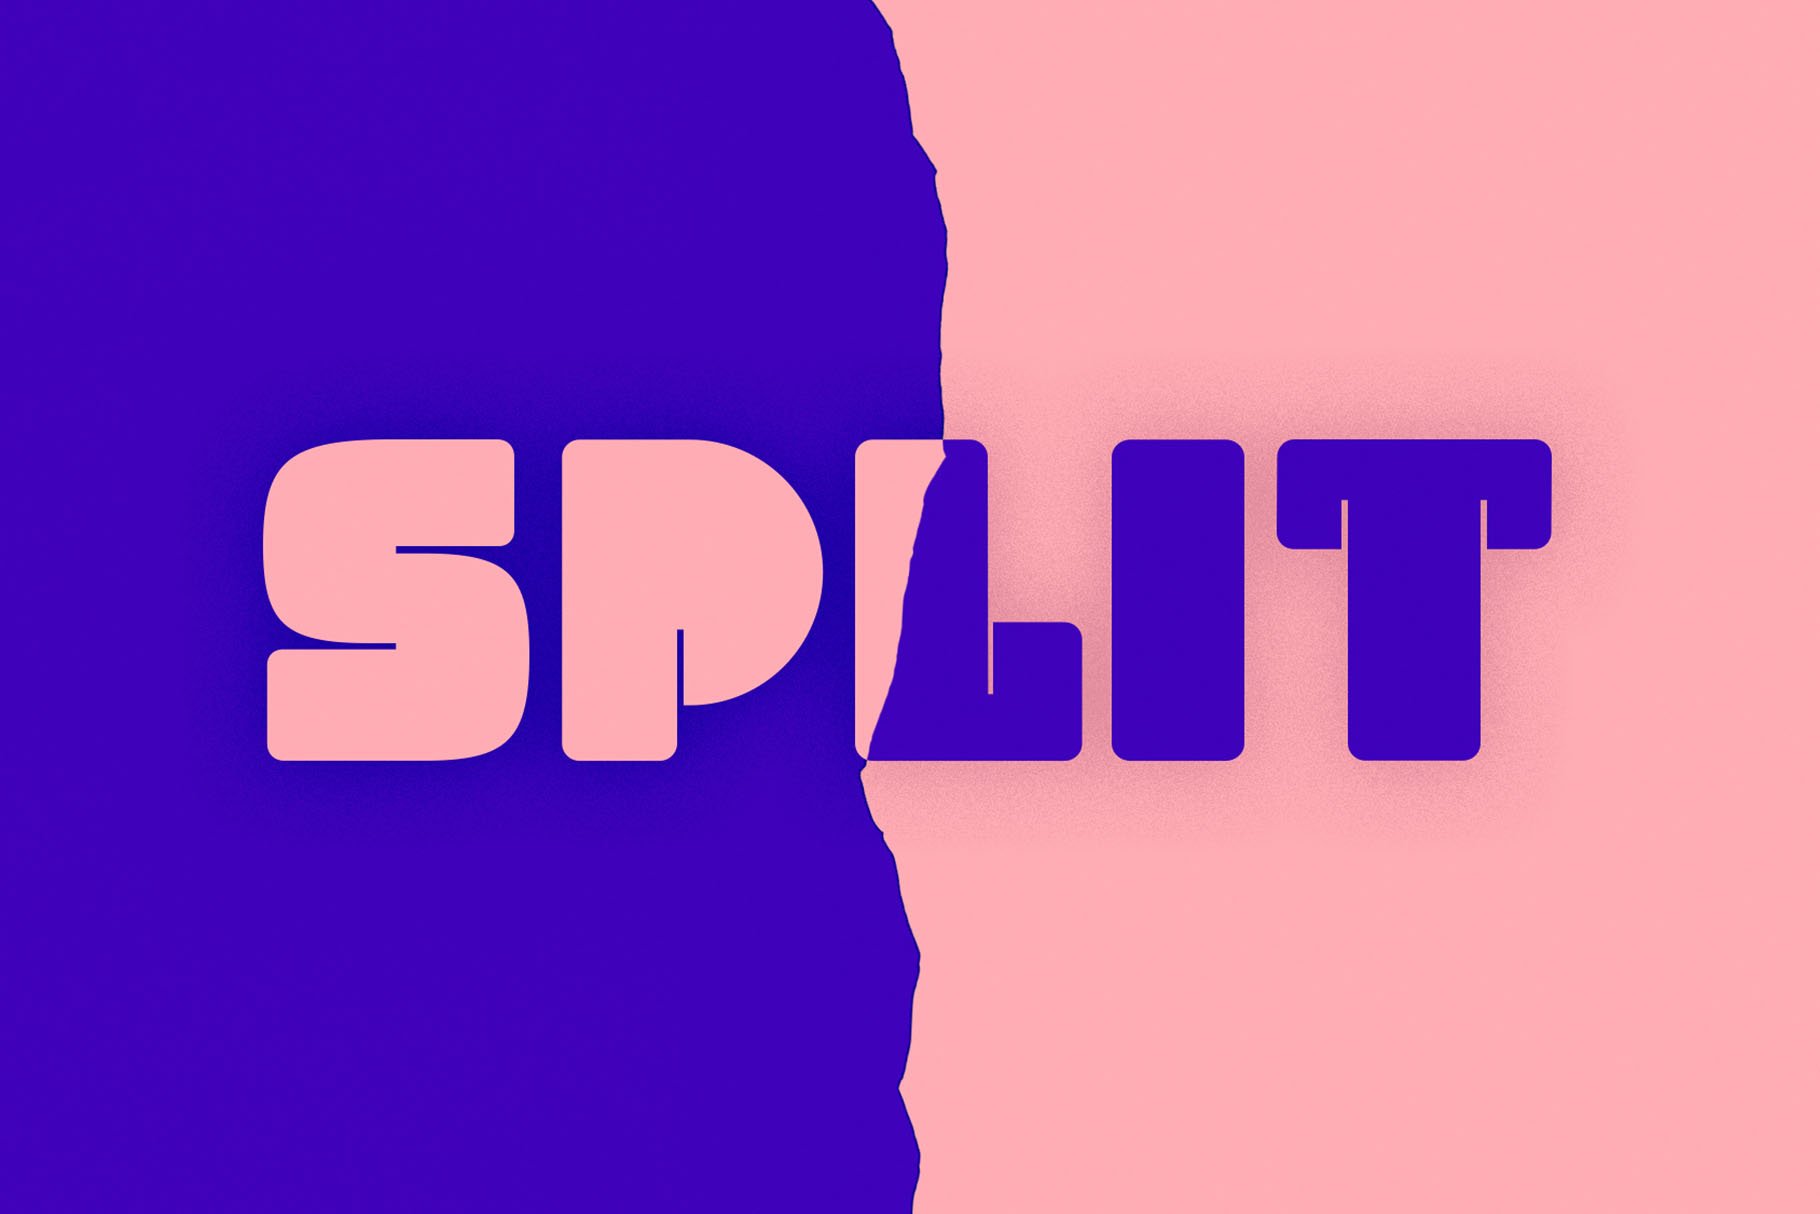 Split Type Family cover image.